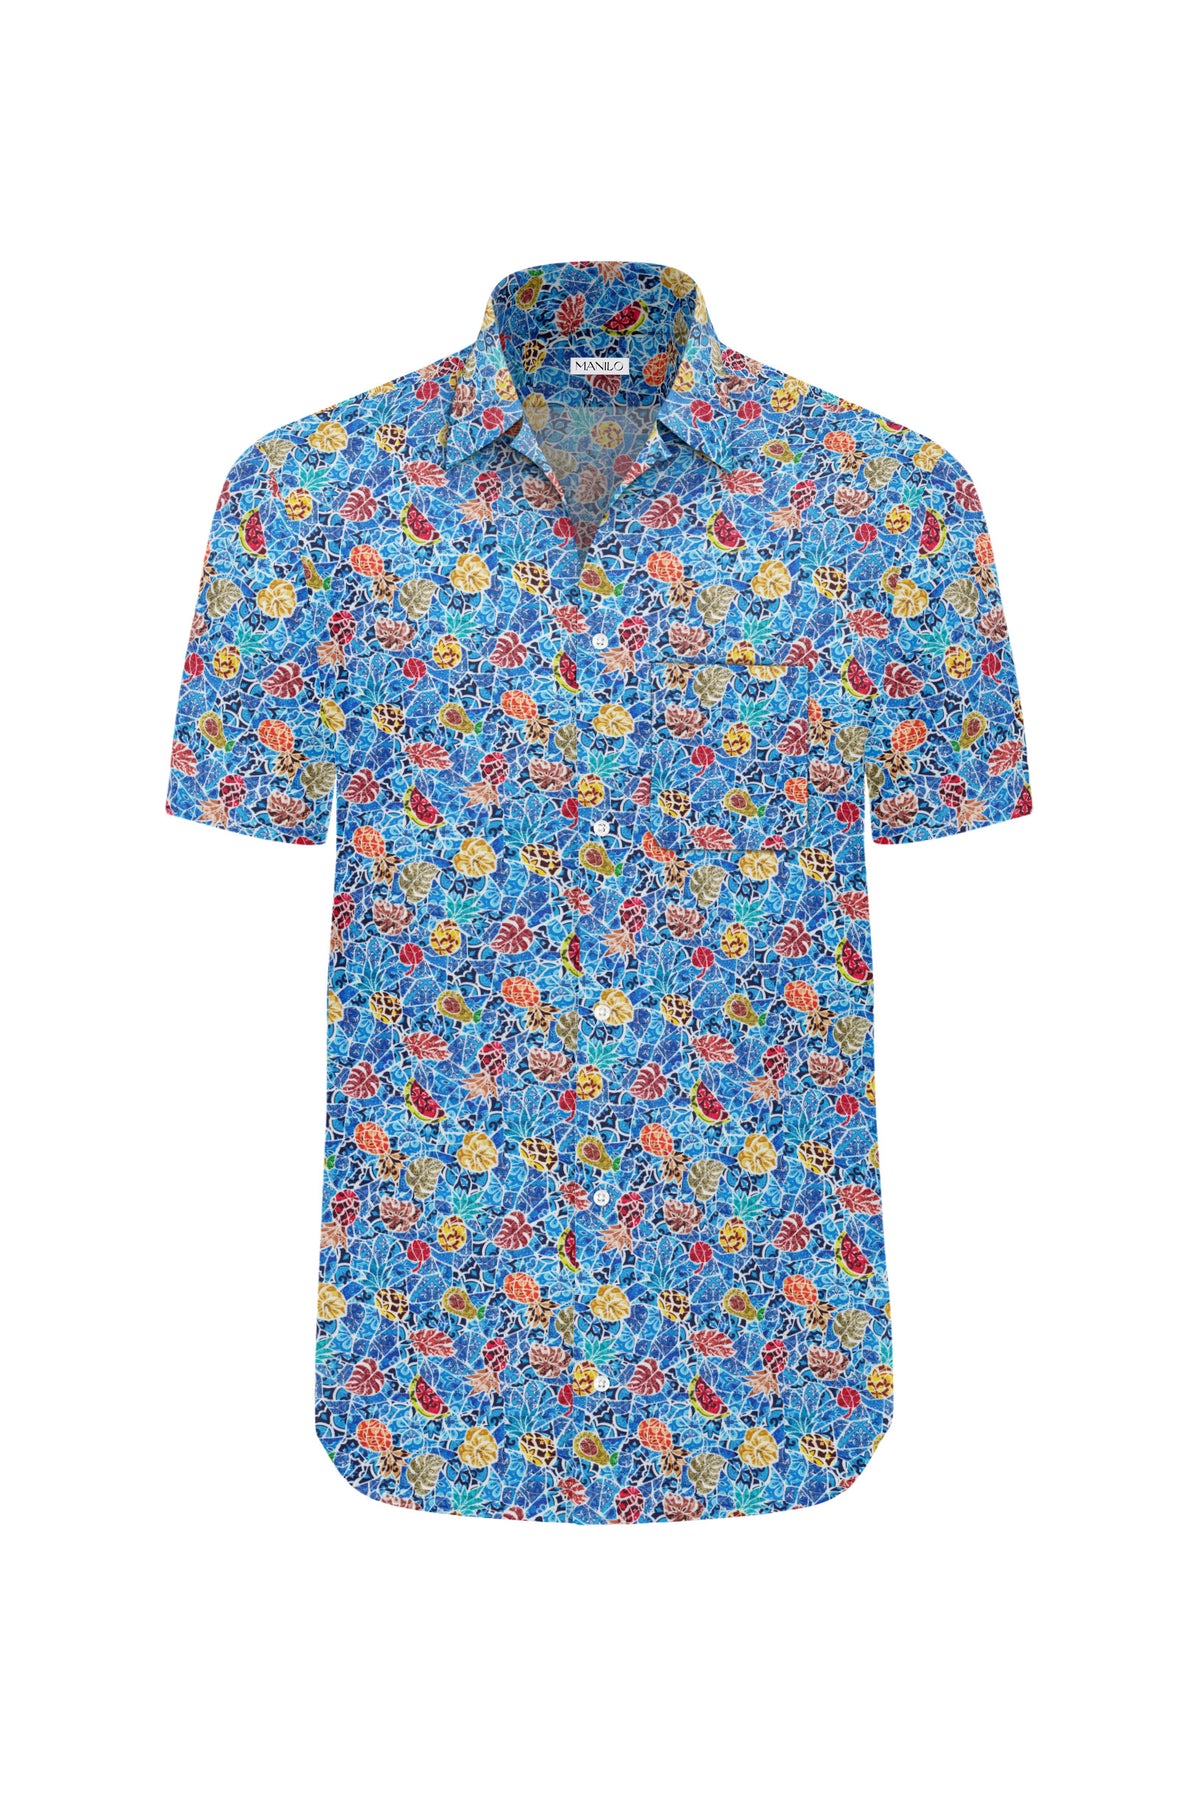 Hawaiian shirt with print pattern in blue (Art. 2201-BS)